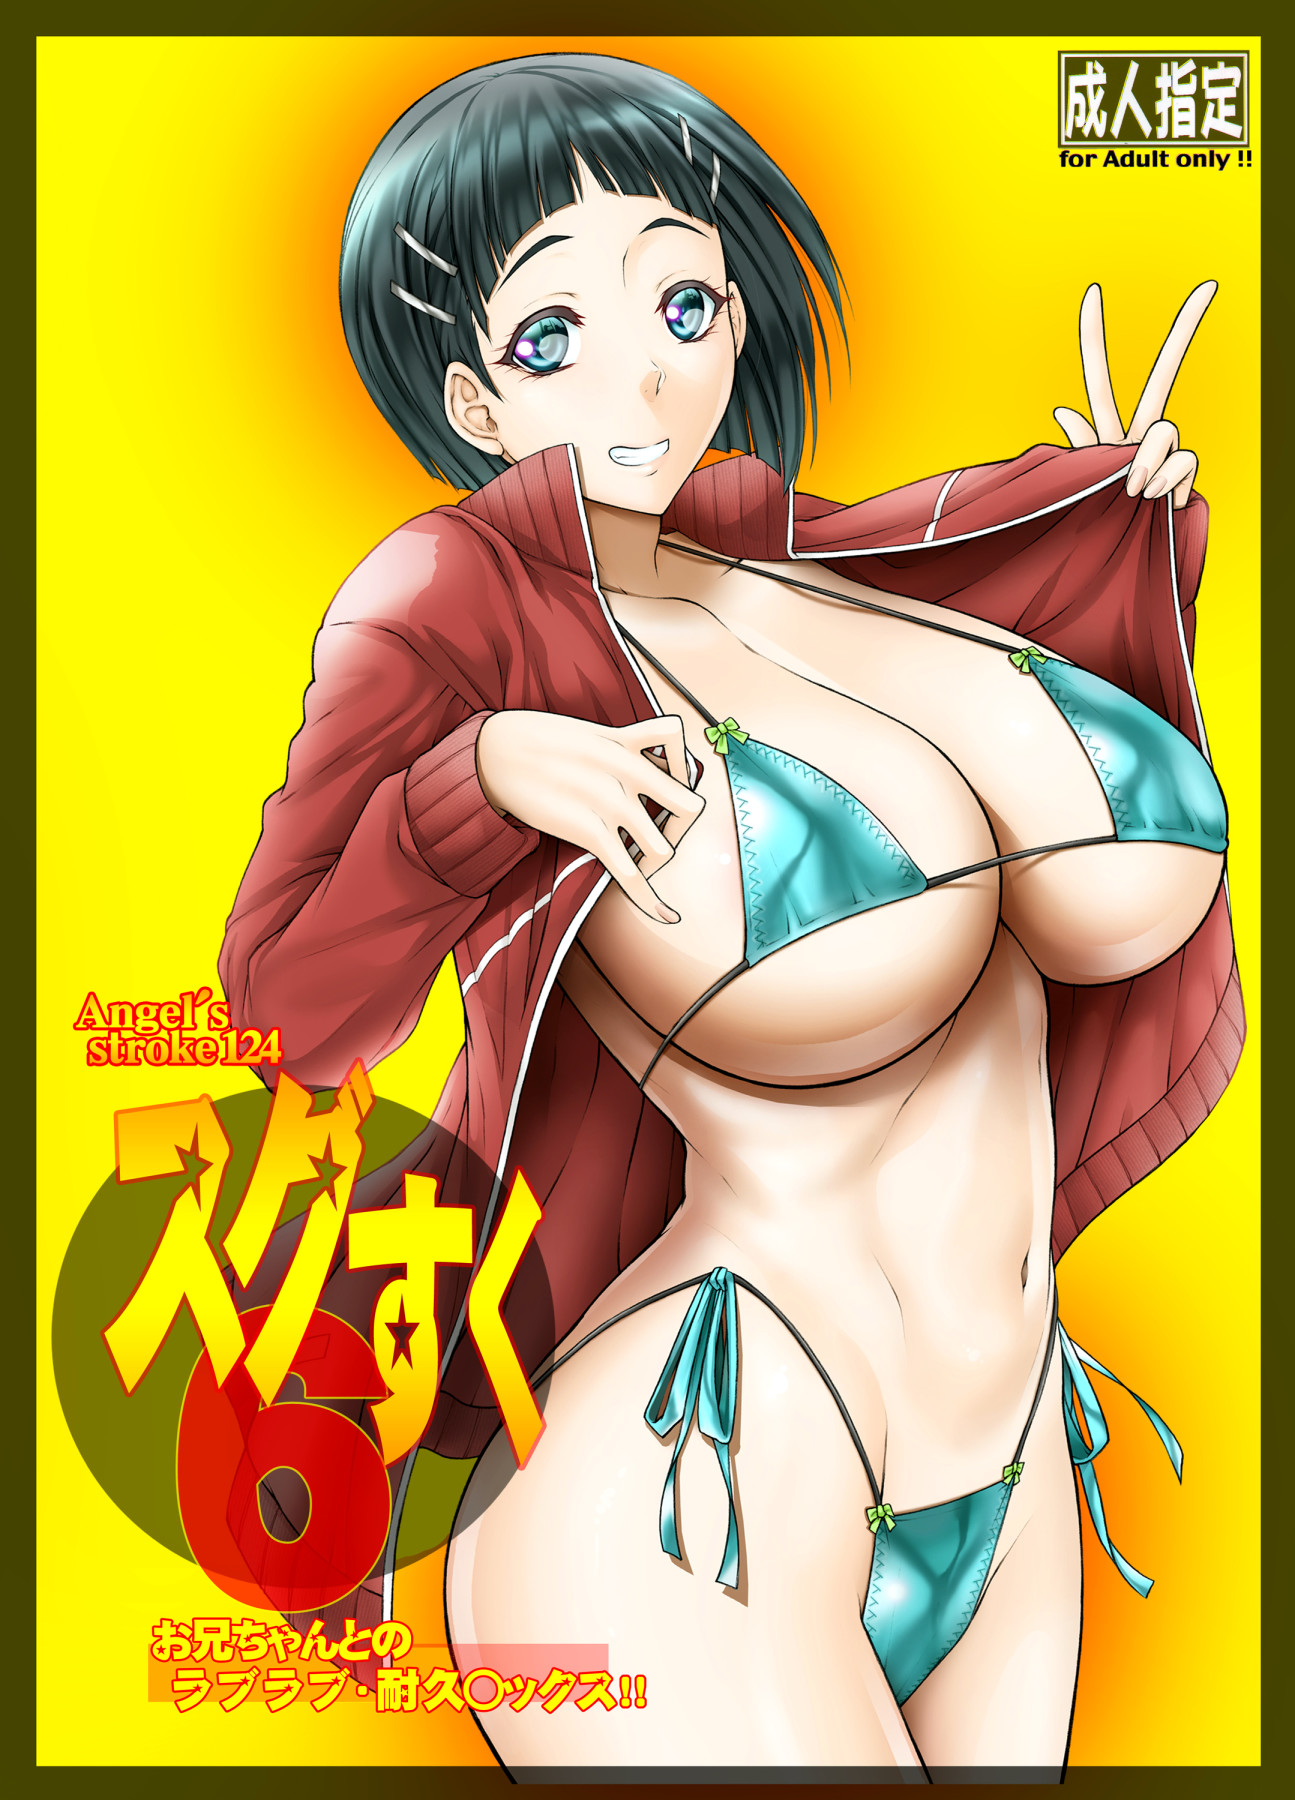 Hentai Manga Comic-Angel's stroke 124 Sugu Suku 6 - Lovey Dovey Endurance Sex With Onii-chan-Read-1